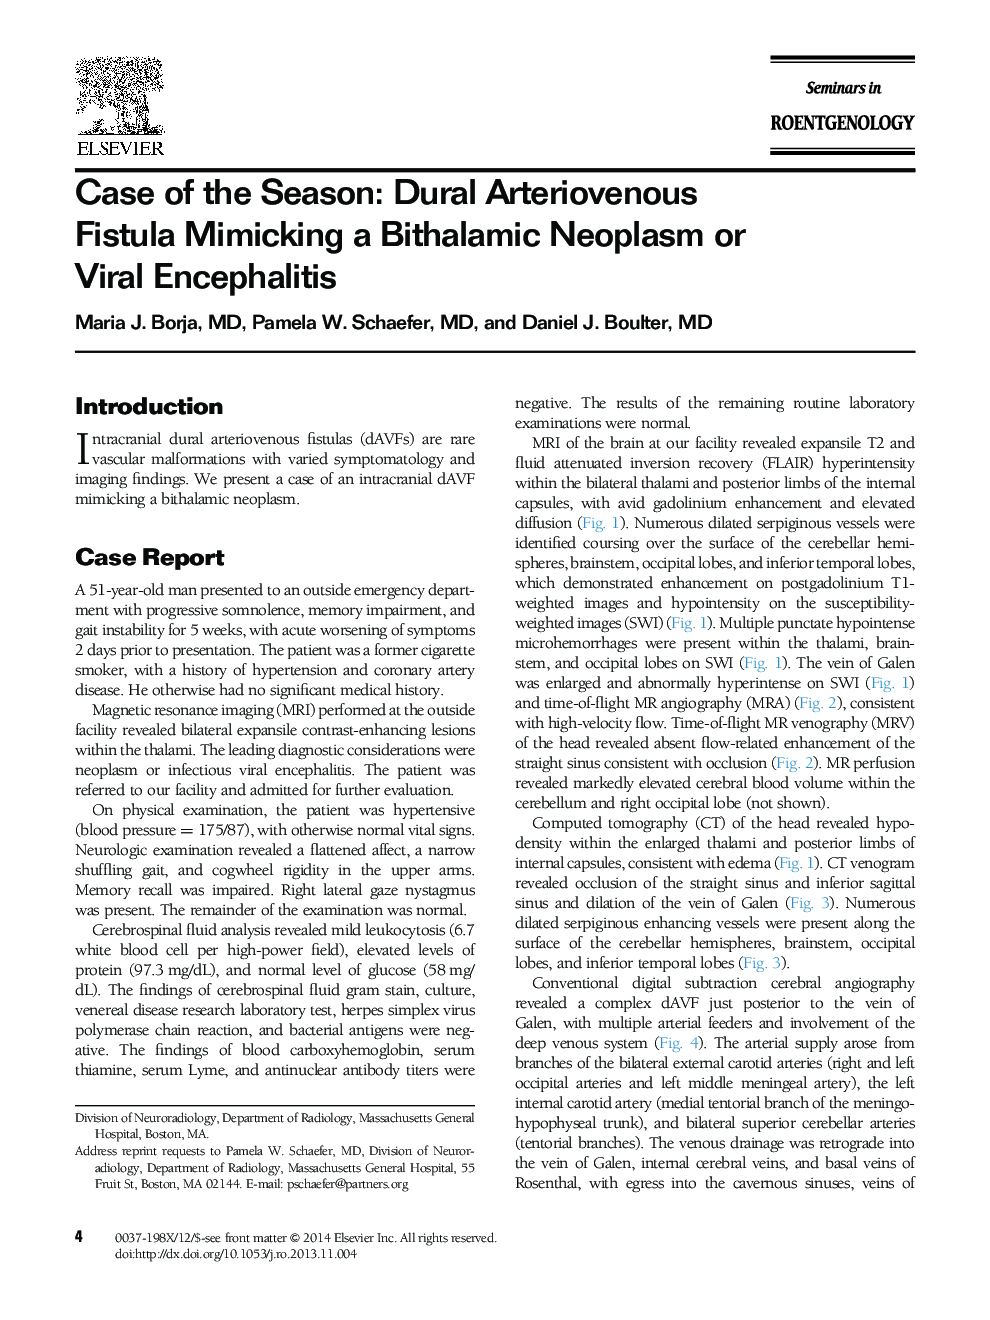 Case of the Season: Dural Arteriovenous Fistula Mimicking a Bithalamic Neoplasm or Viral Encephalitis